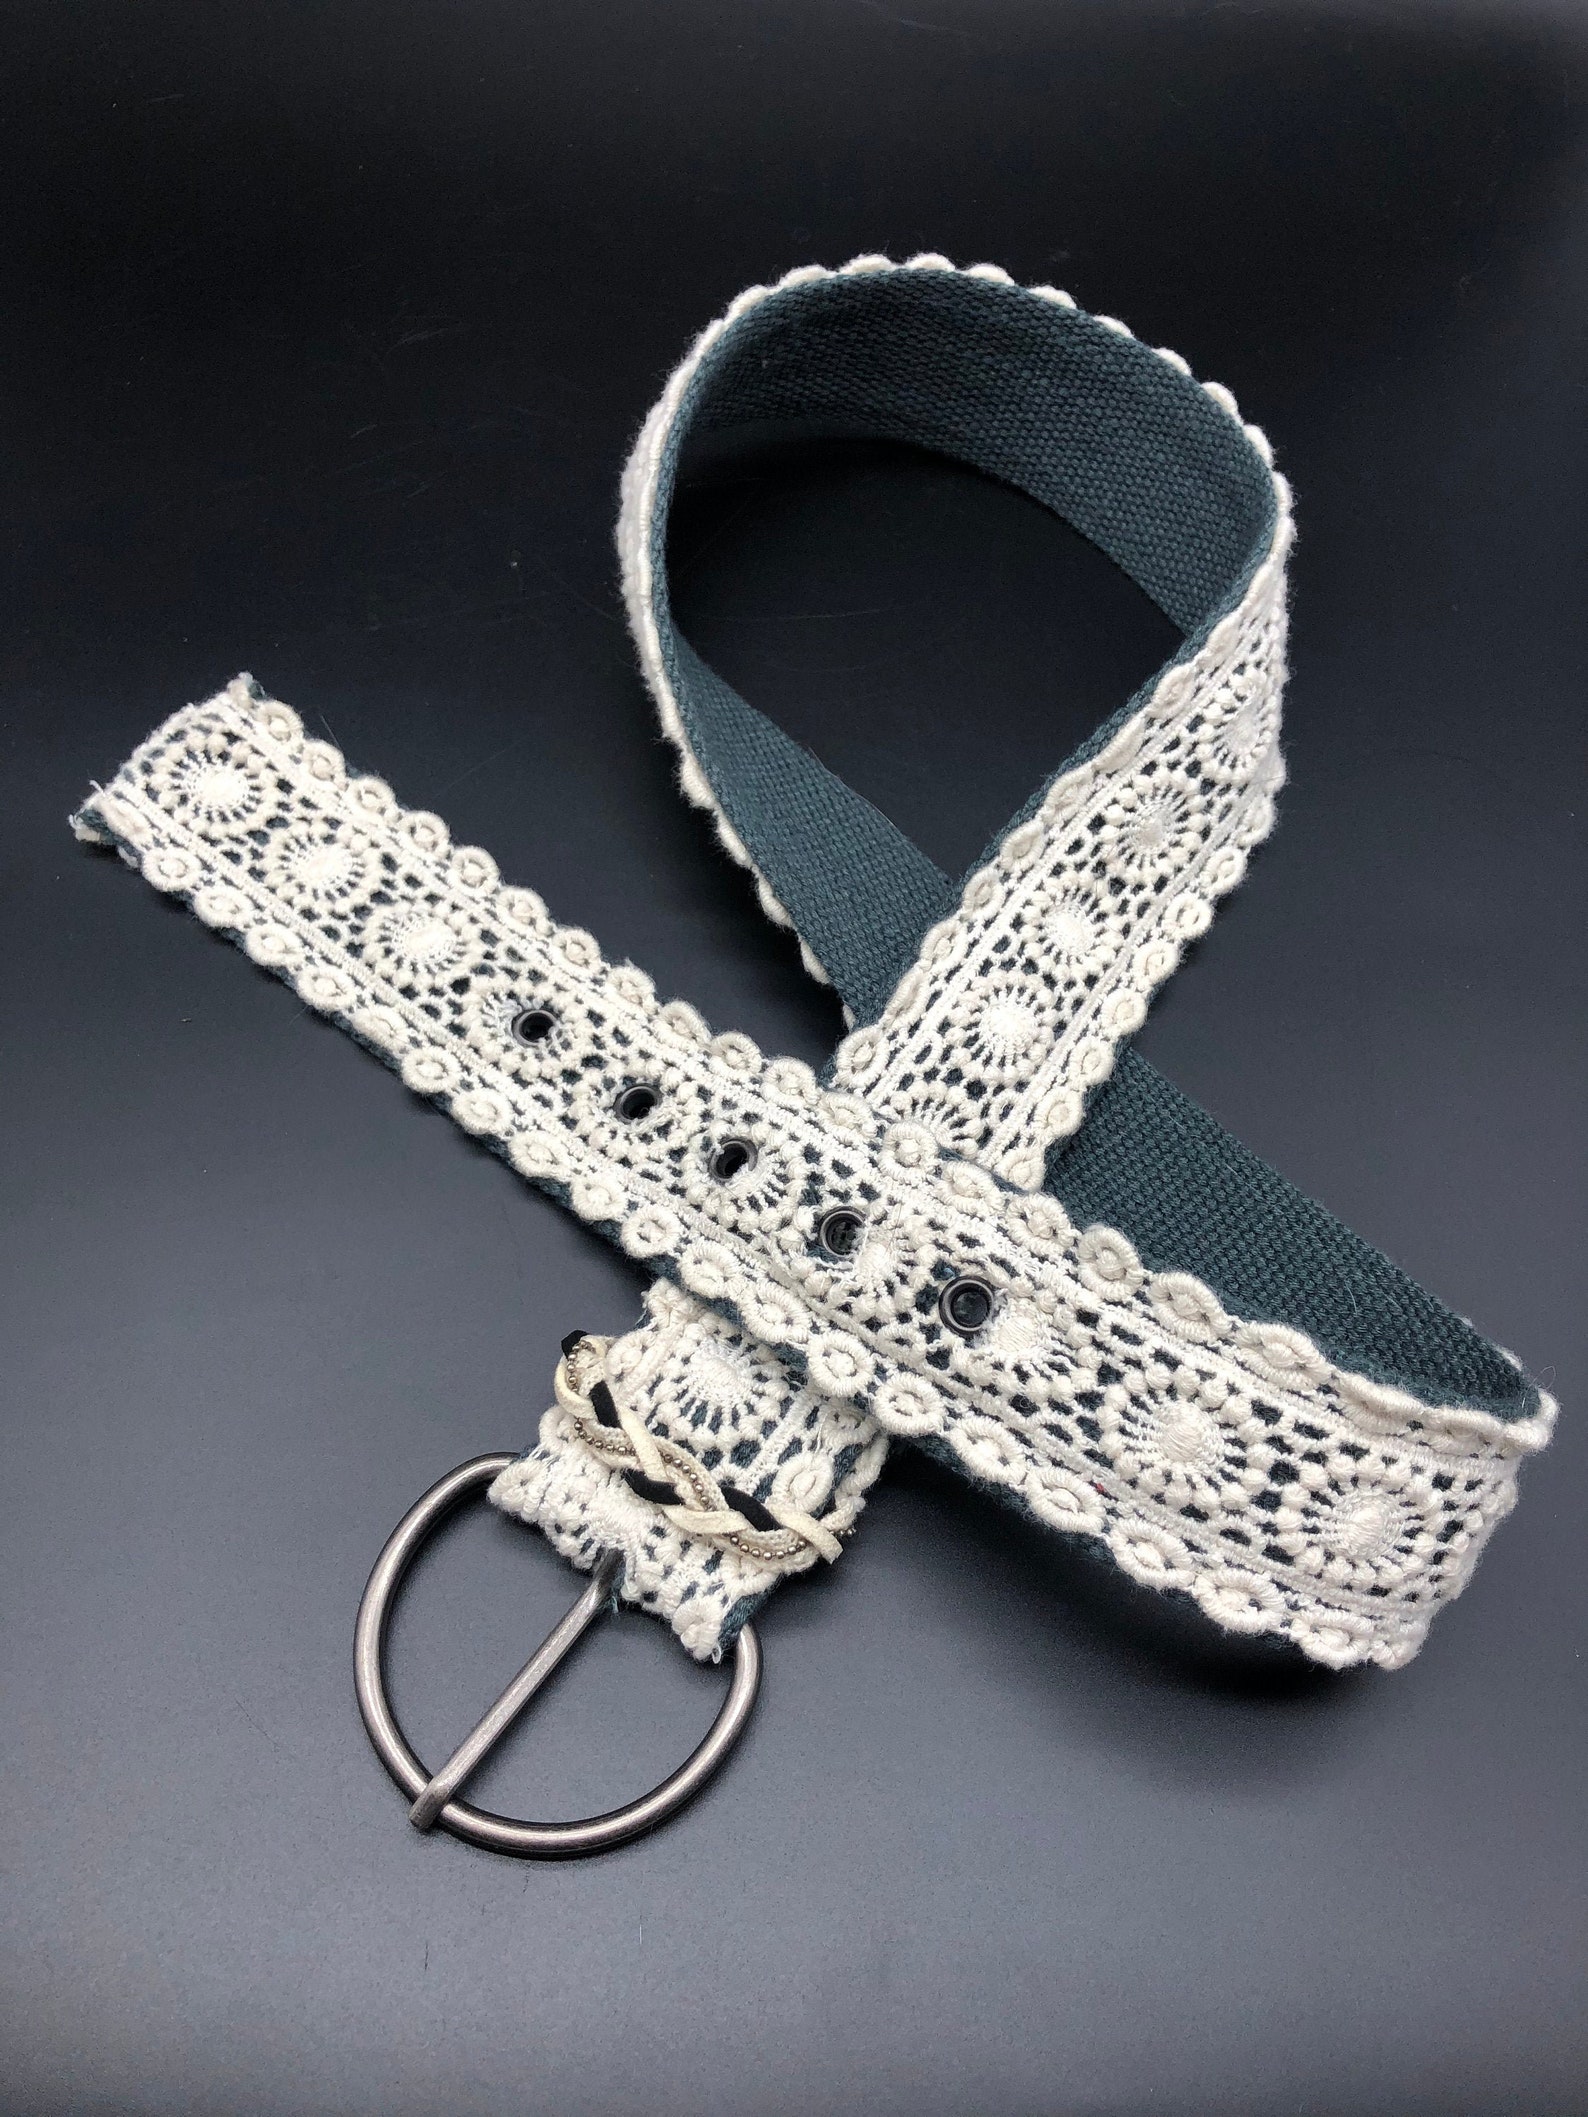 Vintage belt lace / crochet hippie / boho belt in cream with | Etsy